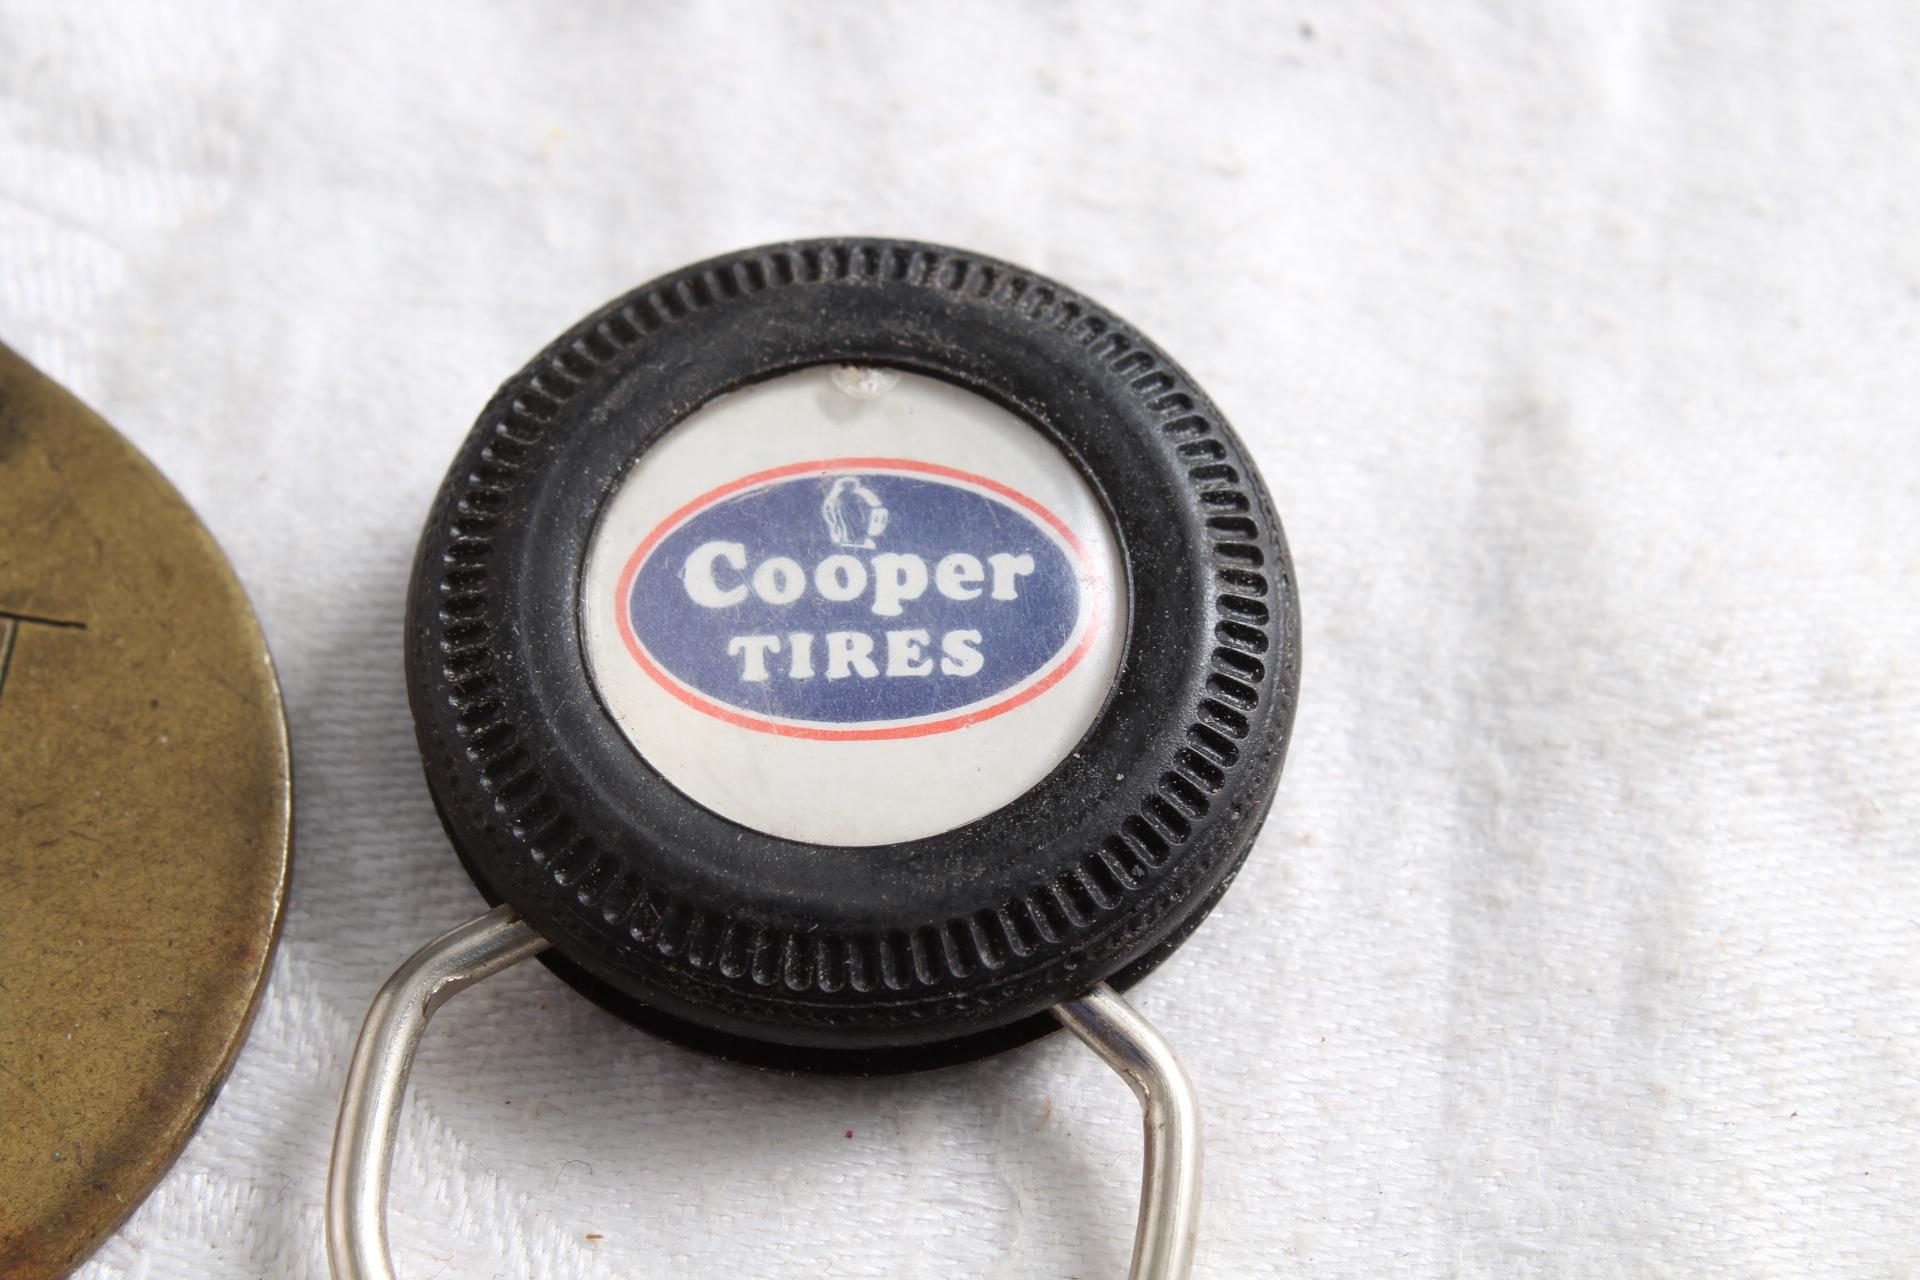 Vintage Cooper Tires Adv Key Chain + Brass Yacht Keys Key Chain